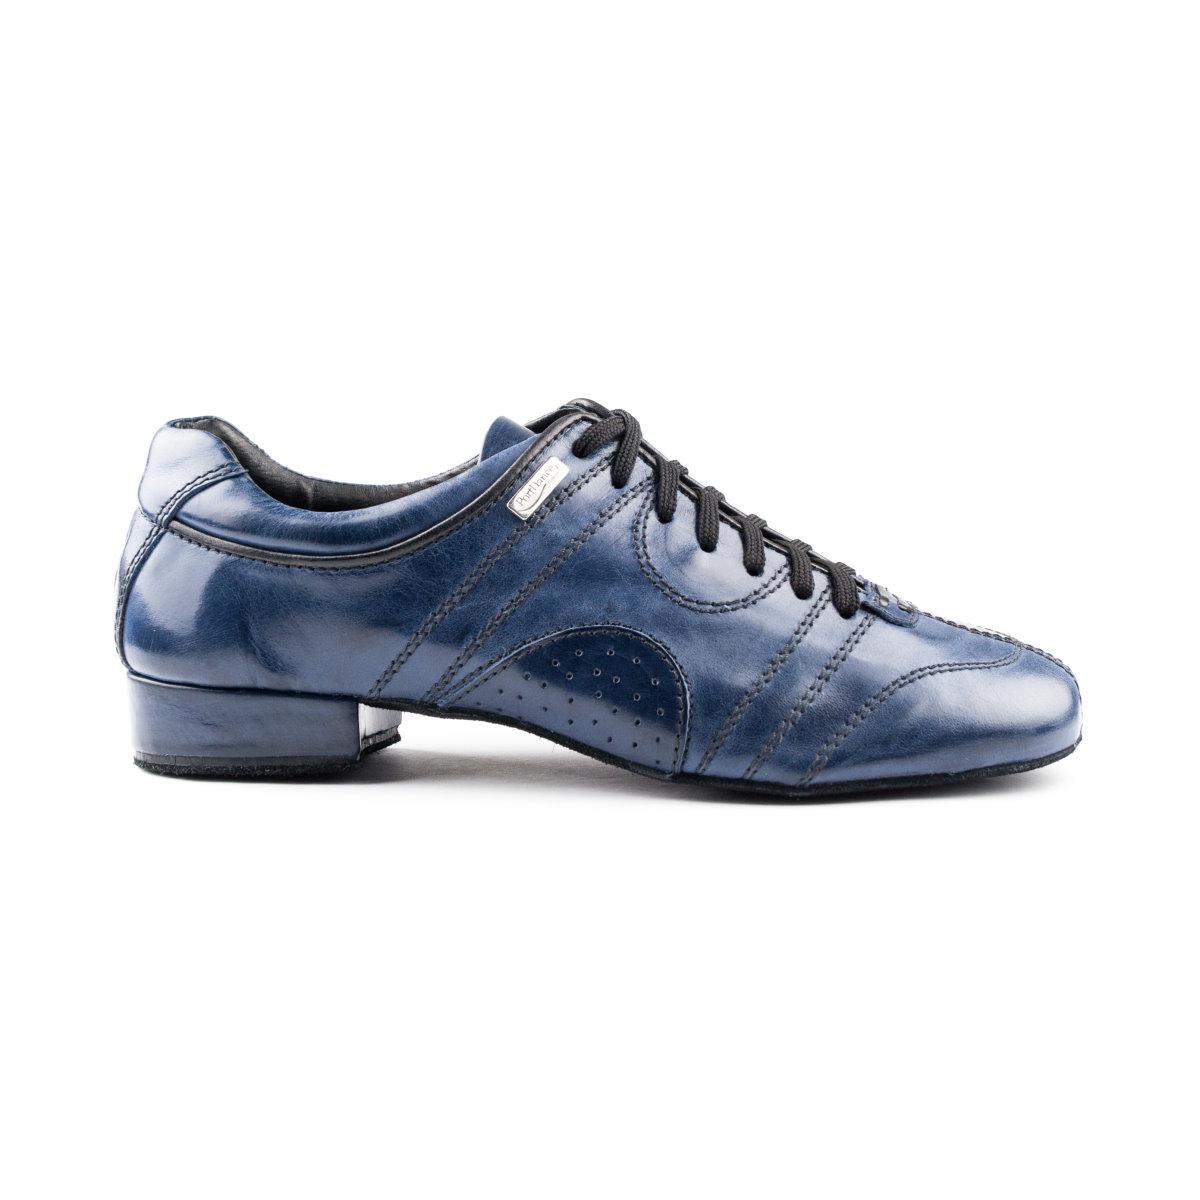 ganado En expansión marrón PortDance - Mens Dance Shoes PD Casual - Leather Blue